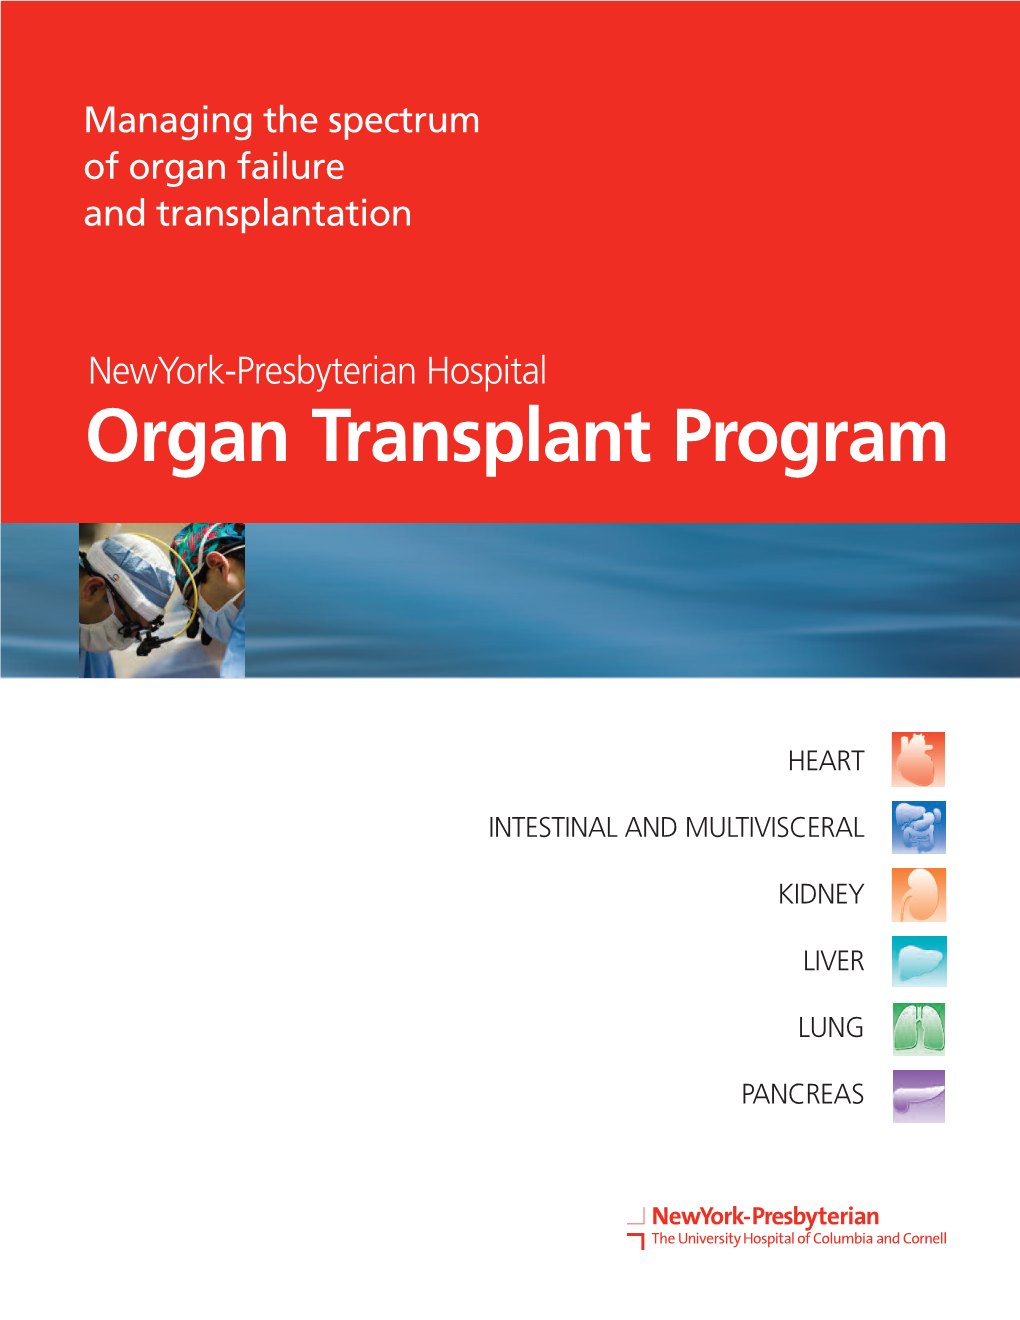 Newyork-Presbyterian Hospital Organ Transplant Program